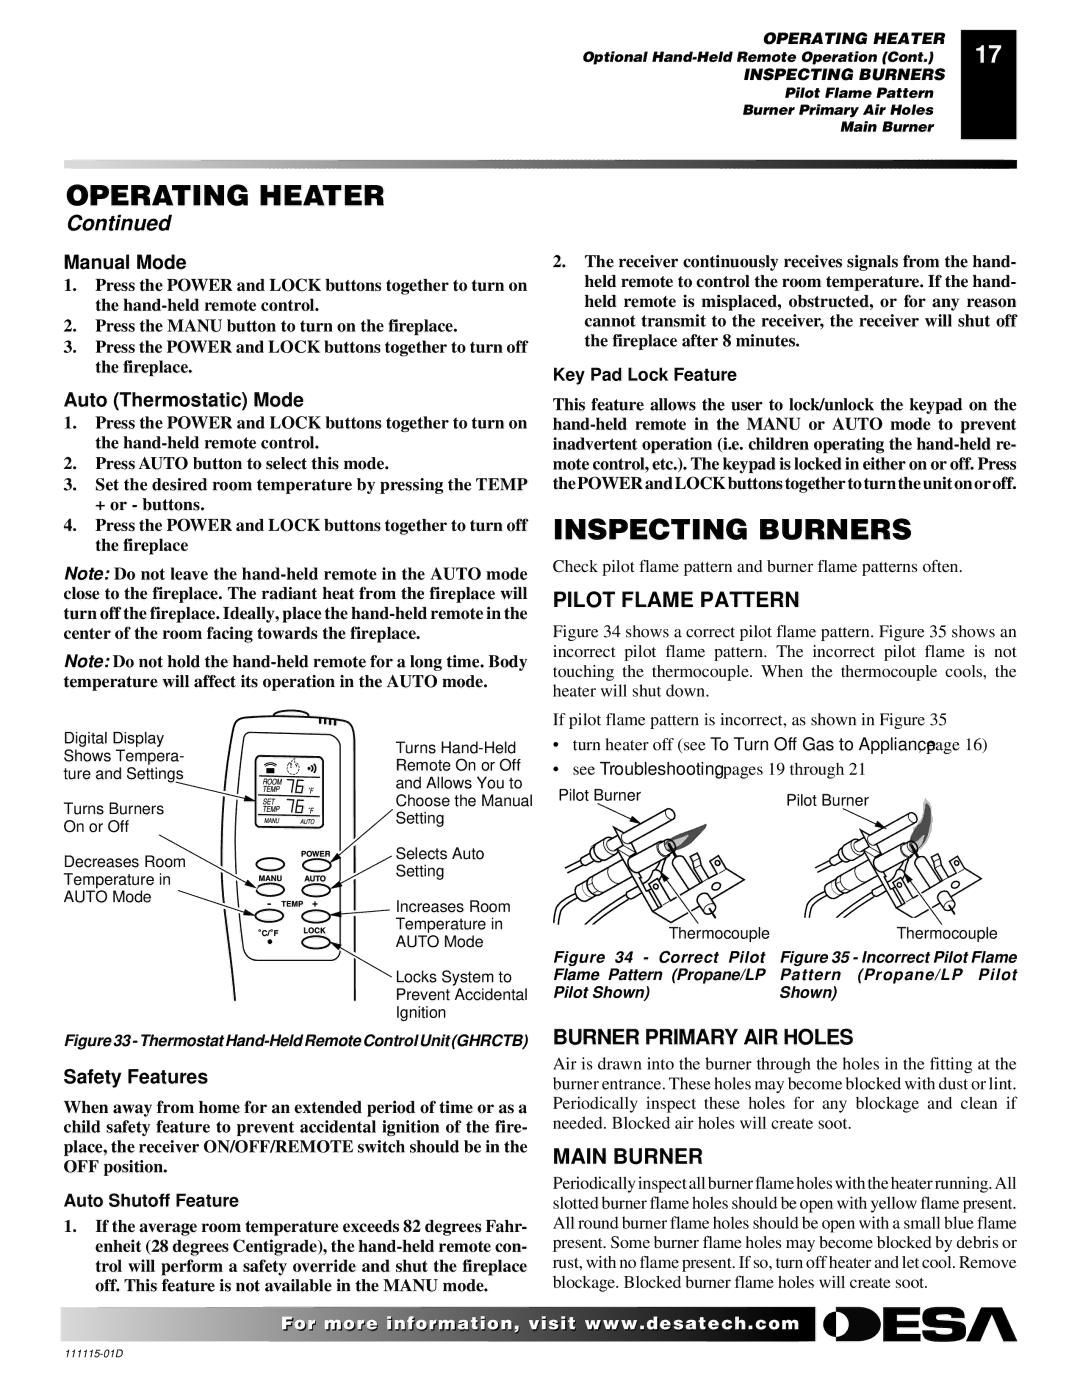 Desa VML27PR installation manual Inspecting Burners, Pilot Flame Pattern, Burner Primary AIR Holes, Main Burner 